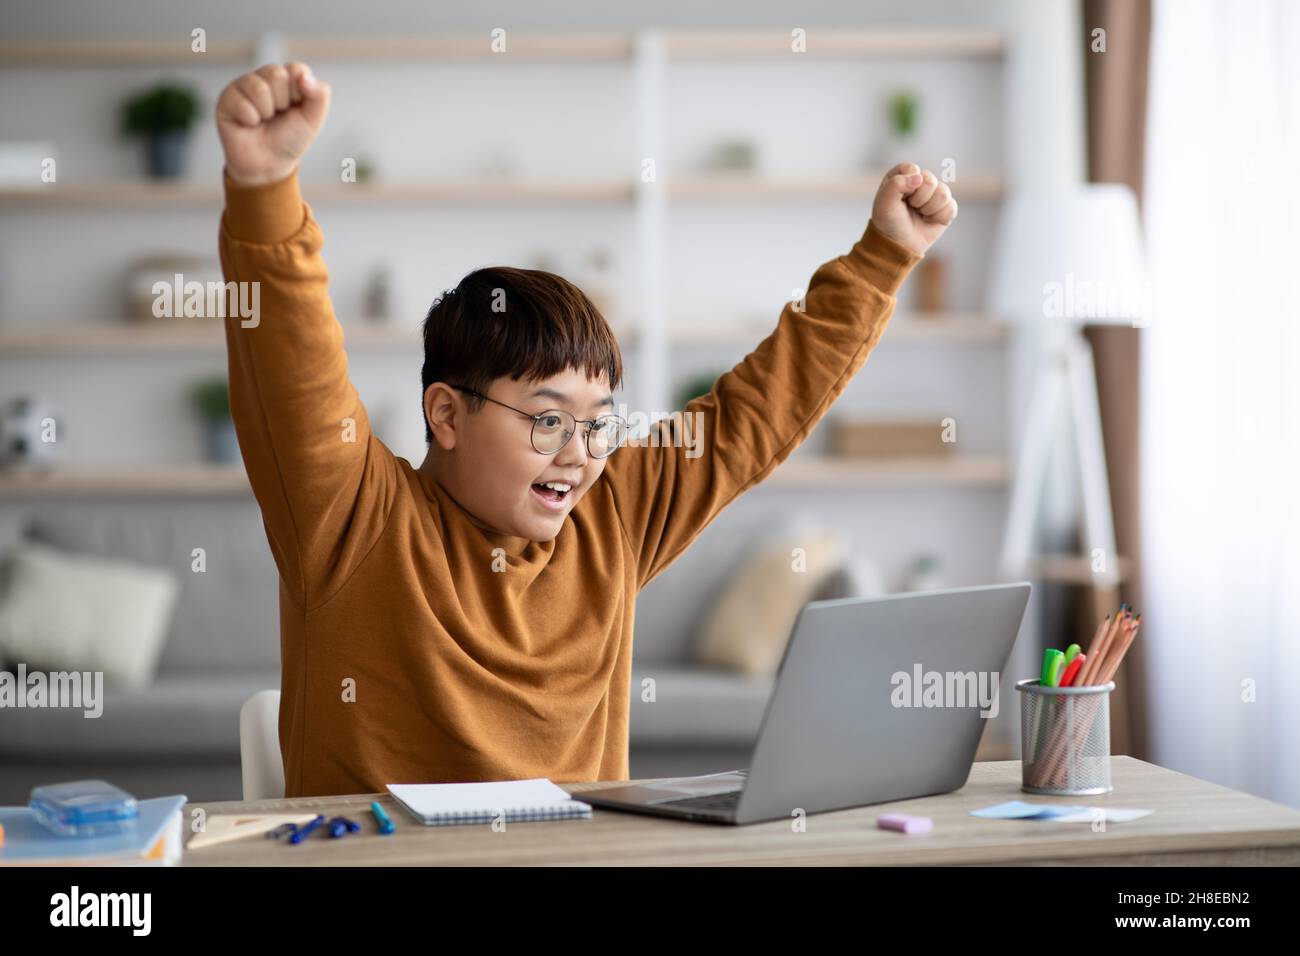 Emotional chubby asian schooler celebrating success, using notebook Stock Photo